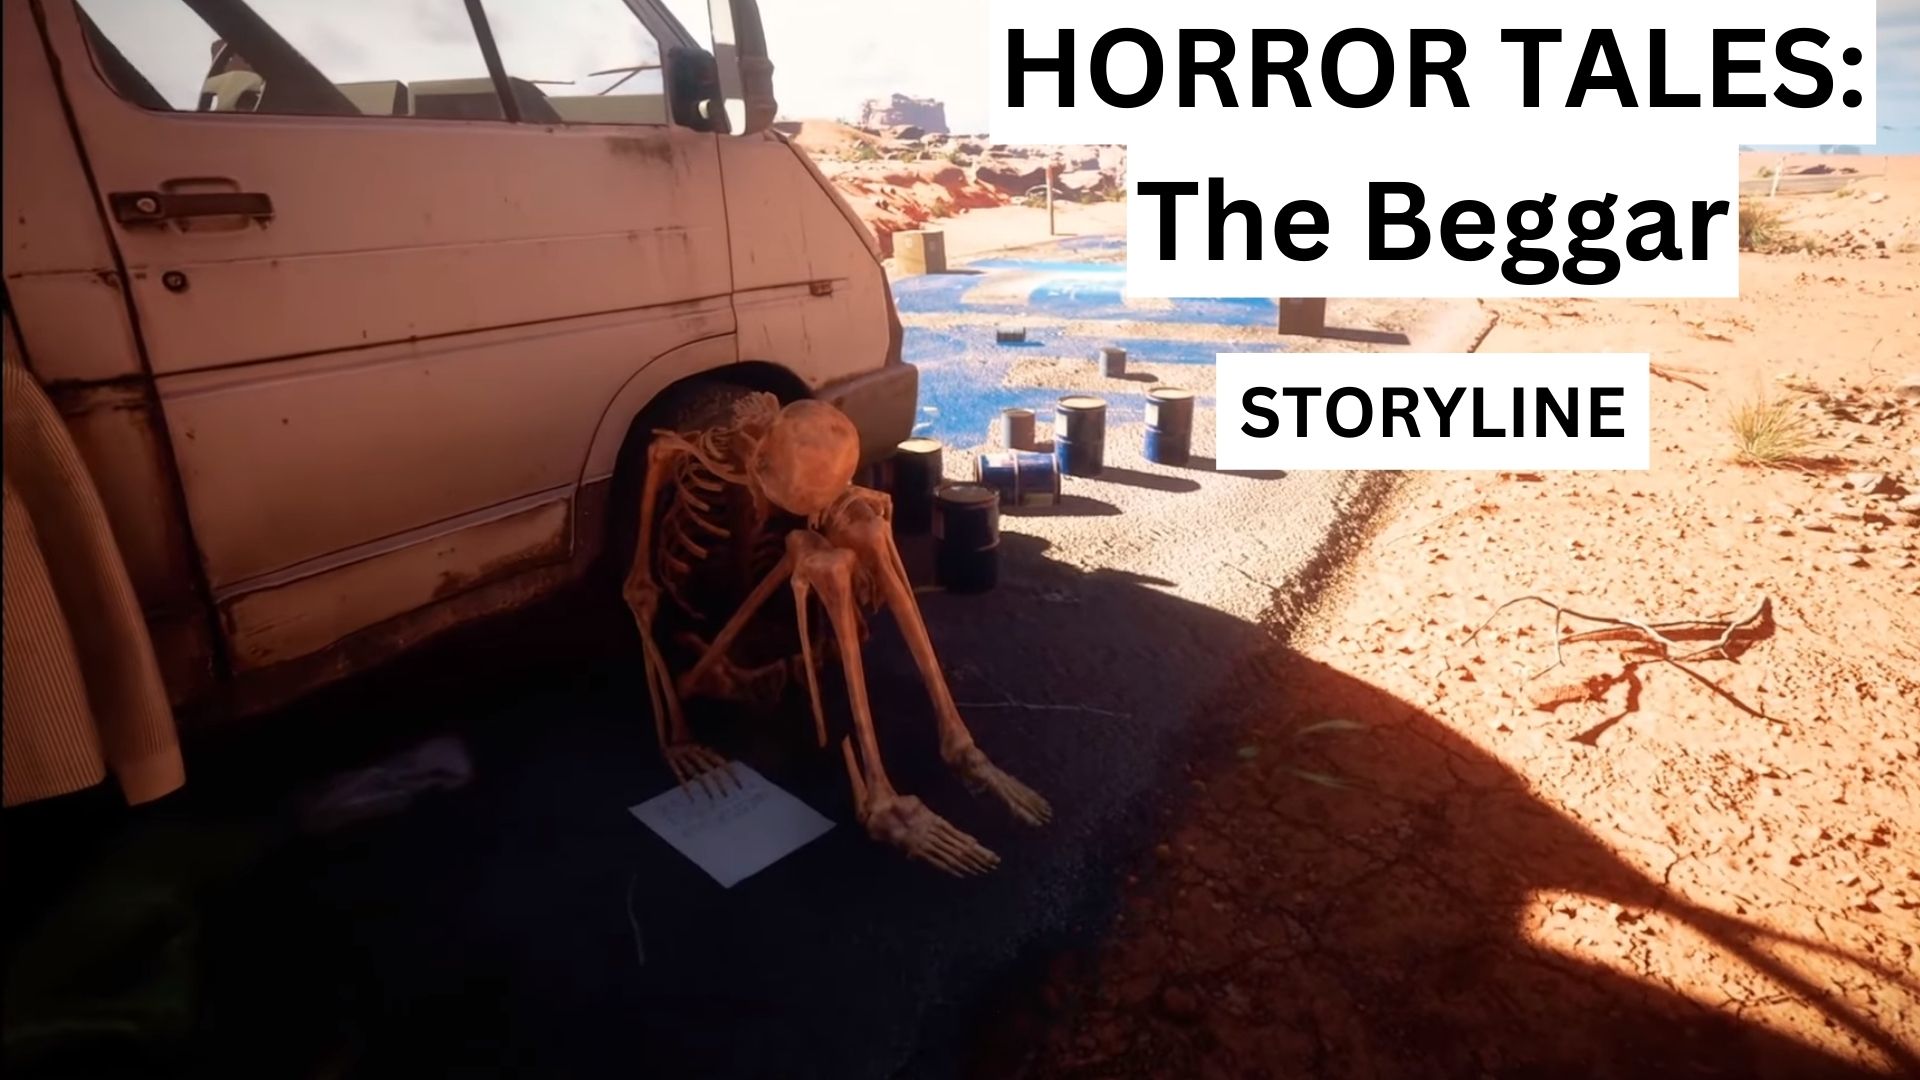 Horror Tales The Beggar storyline